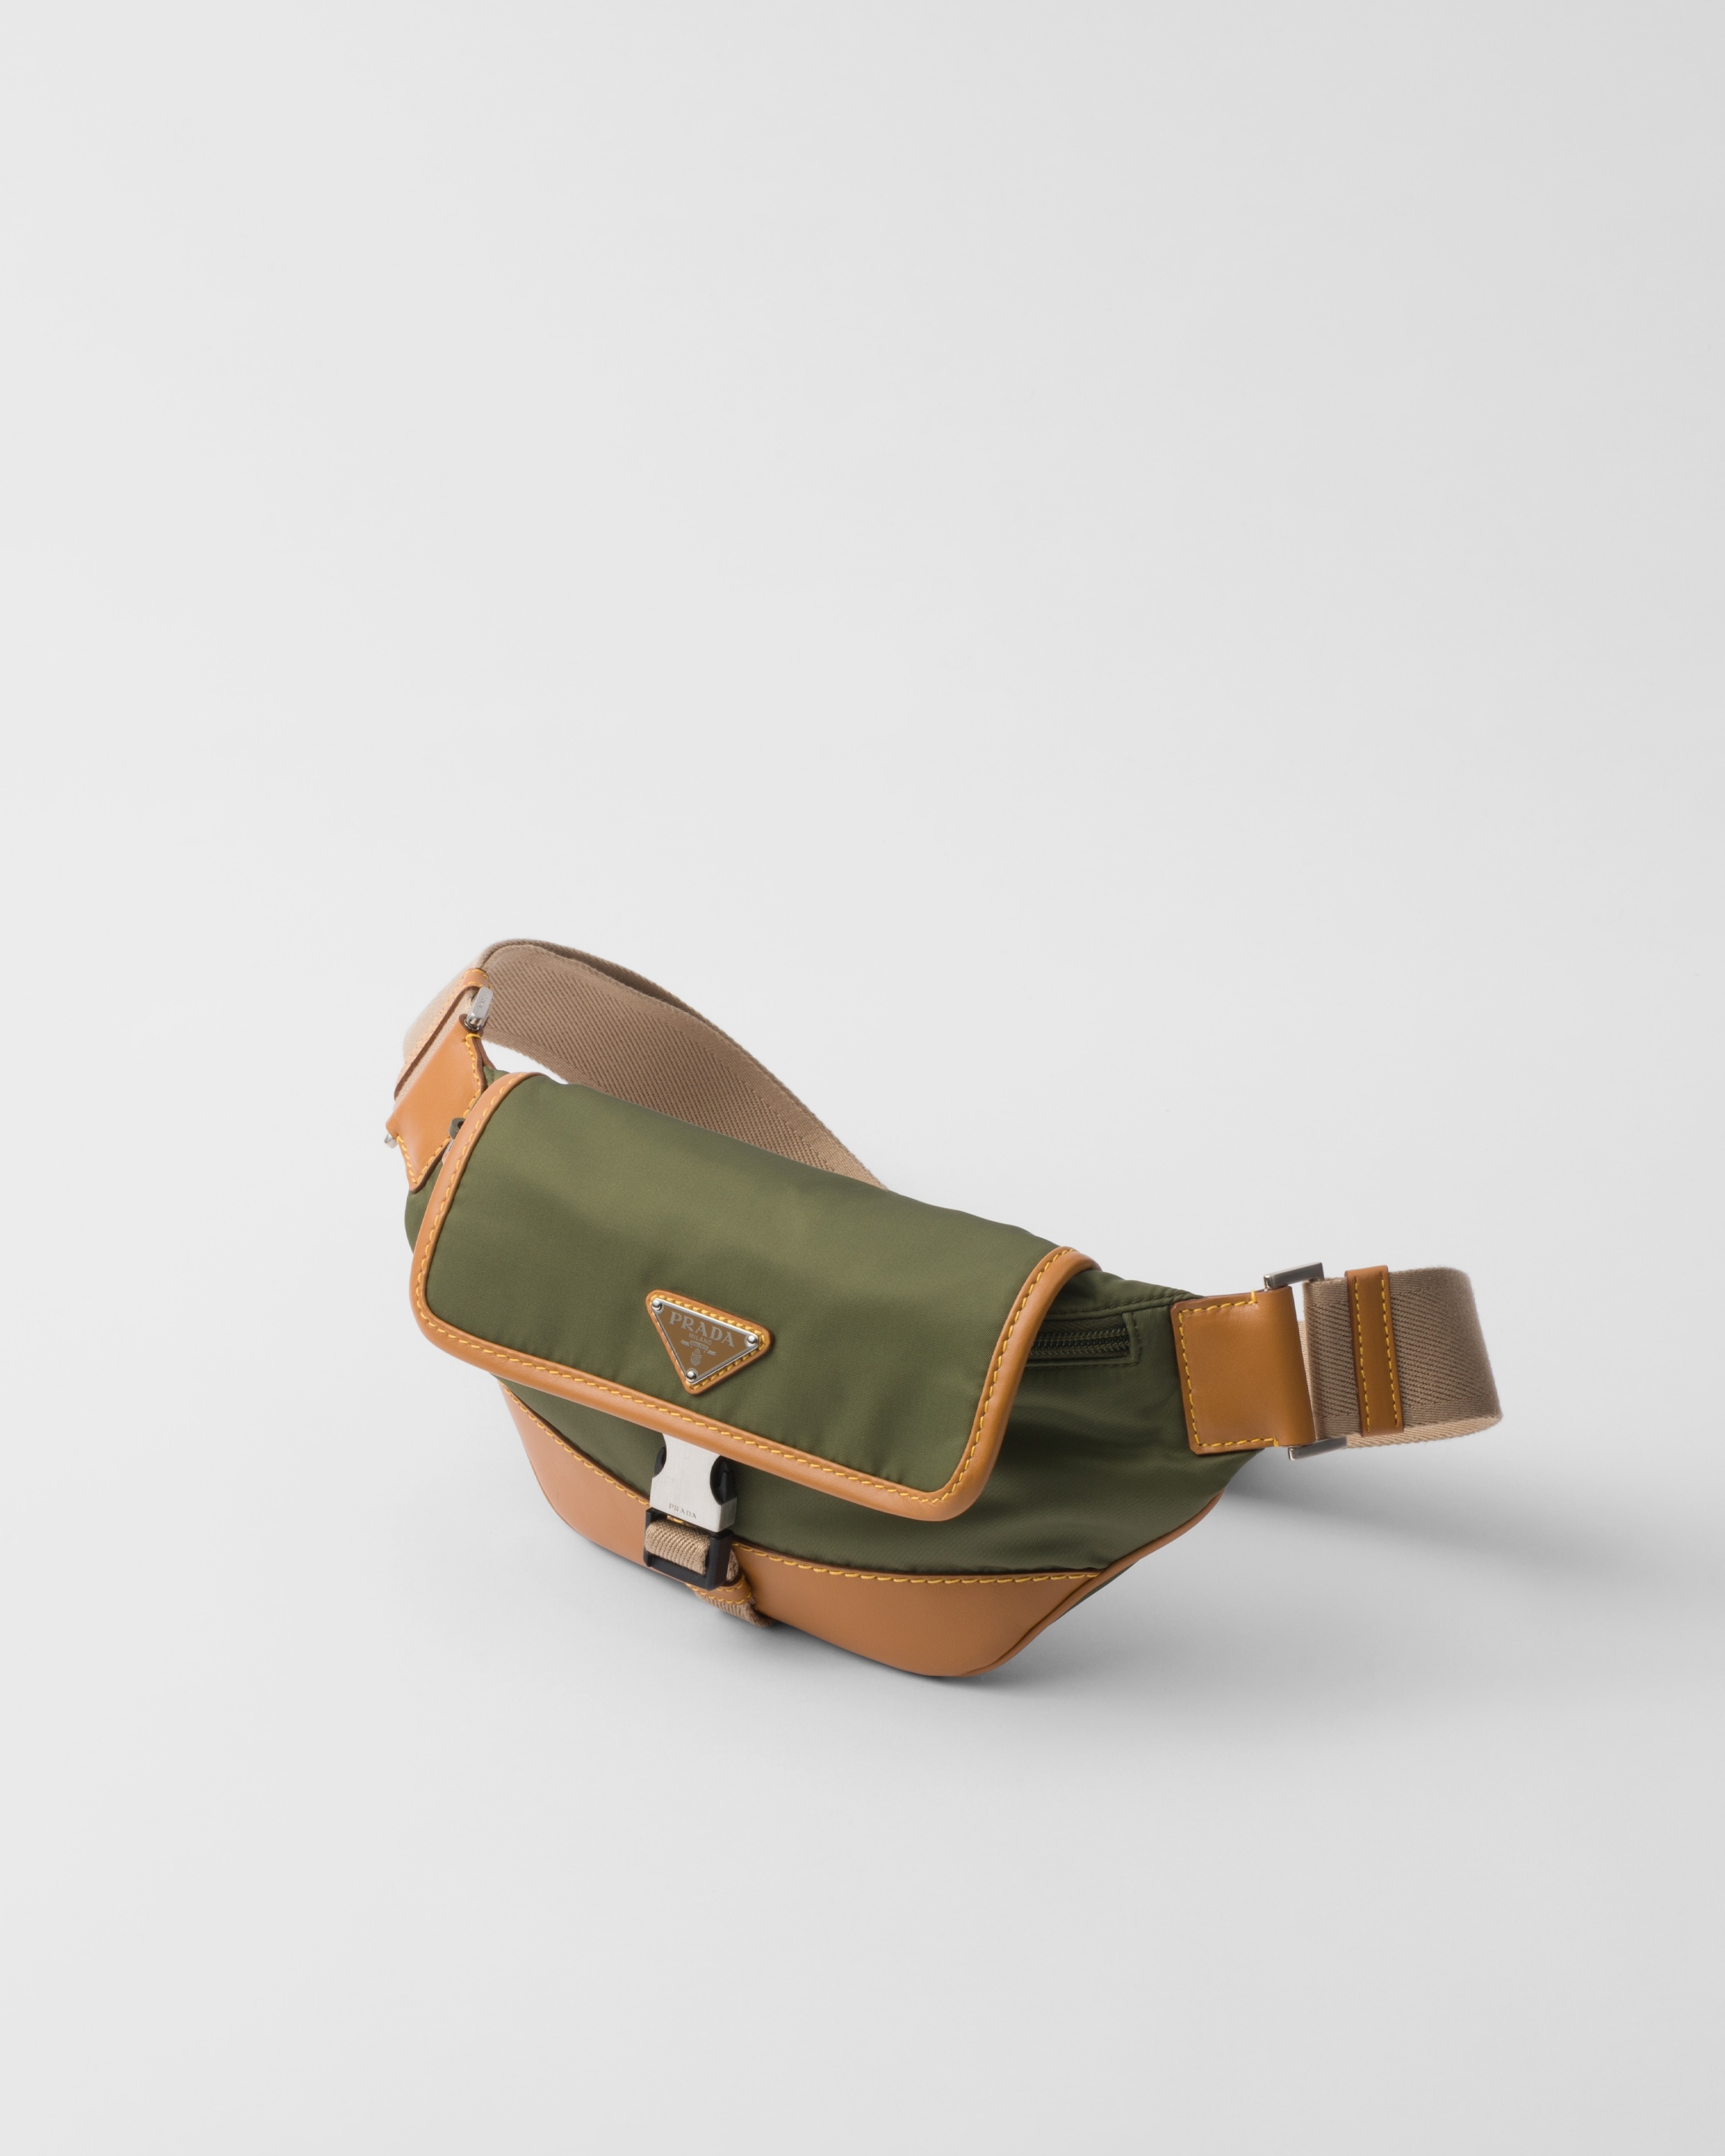 Re-Nylon and leather shoulder bag - 2